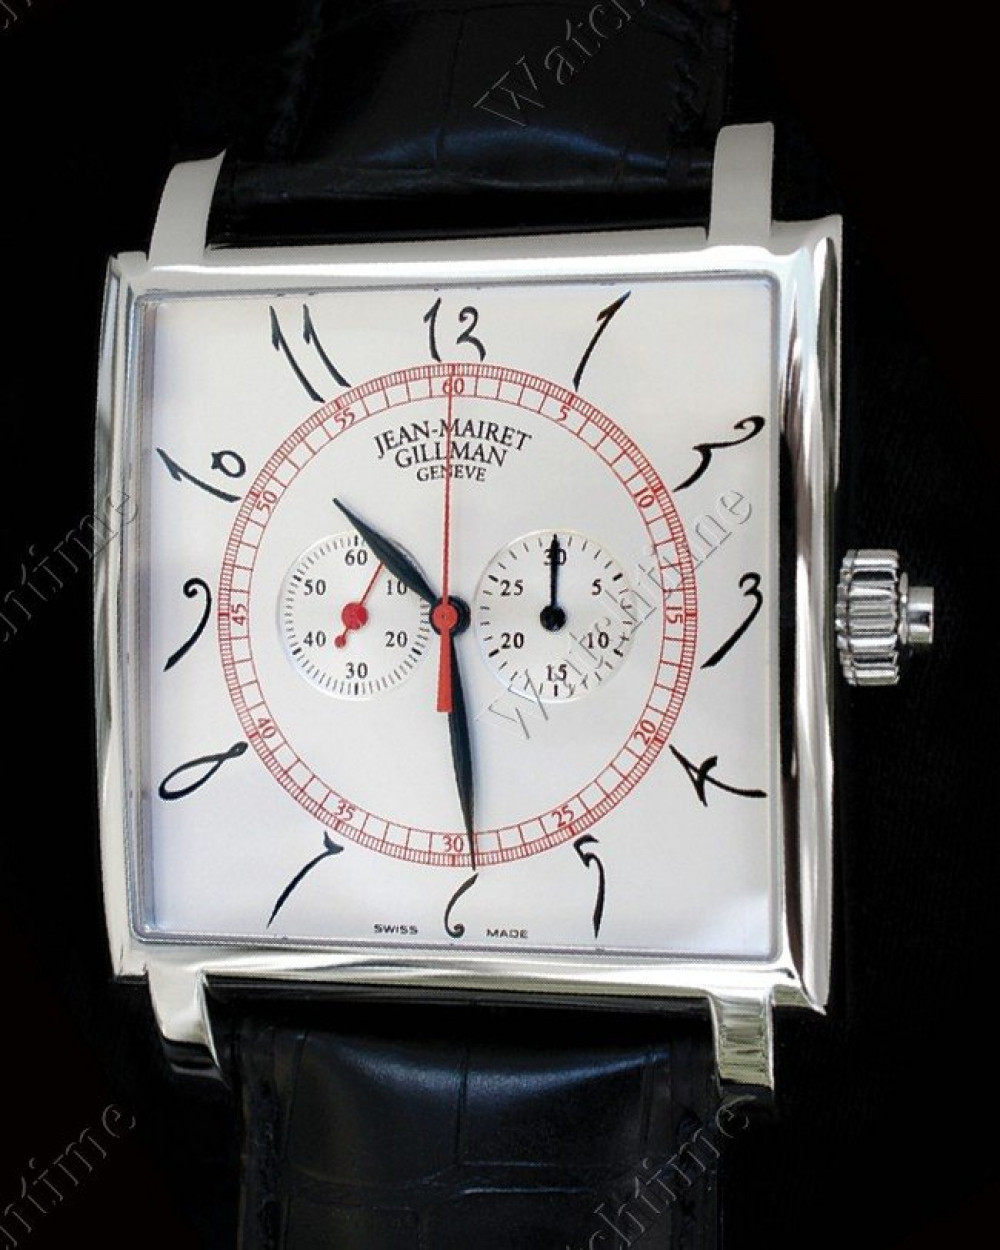 Zegarek firmy Jean-Mairet & Gillmann, model Mono-Pusher Chrono